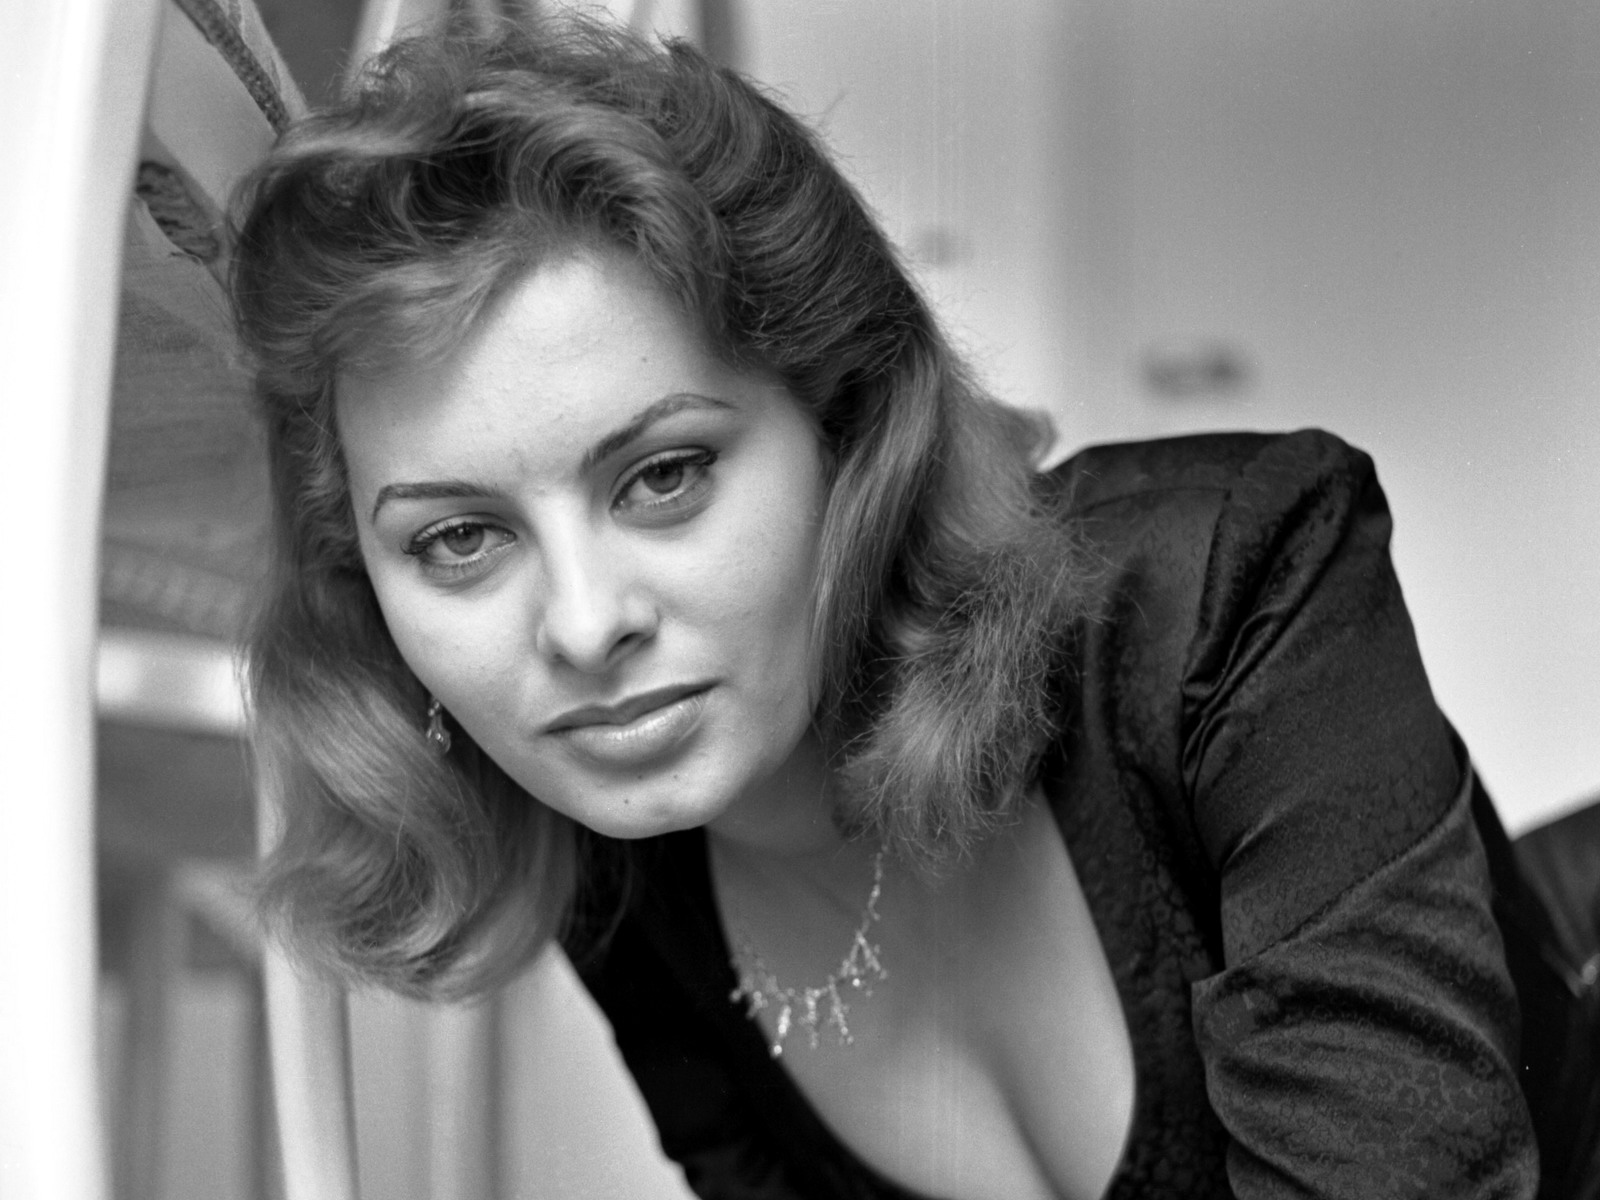 Sophia Loren pic